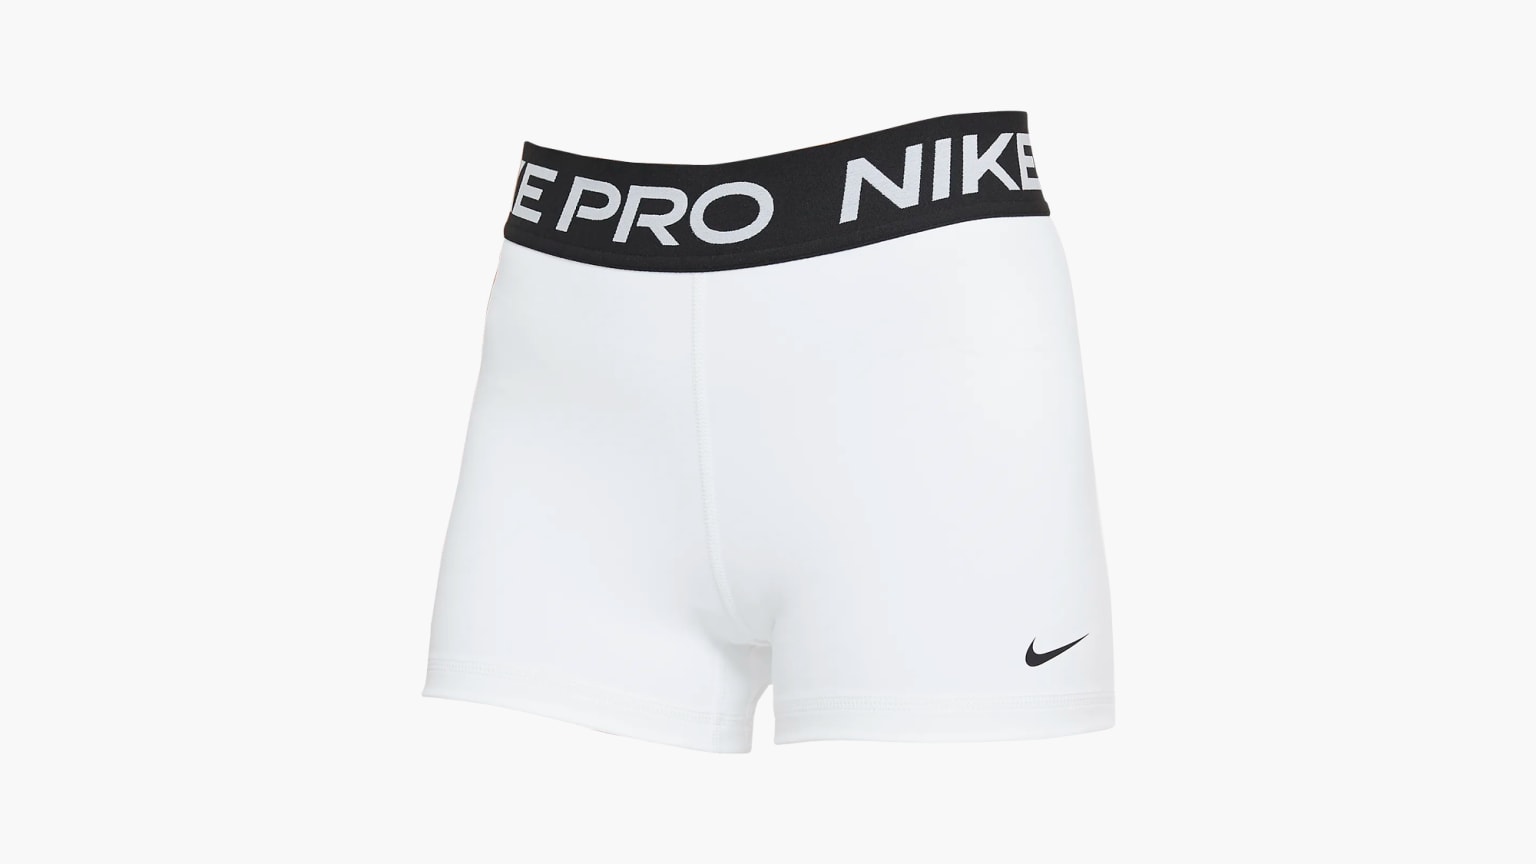 Nike Women's 3 Pro Training Shorts - White / Black